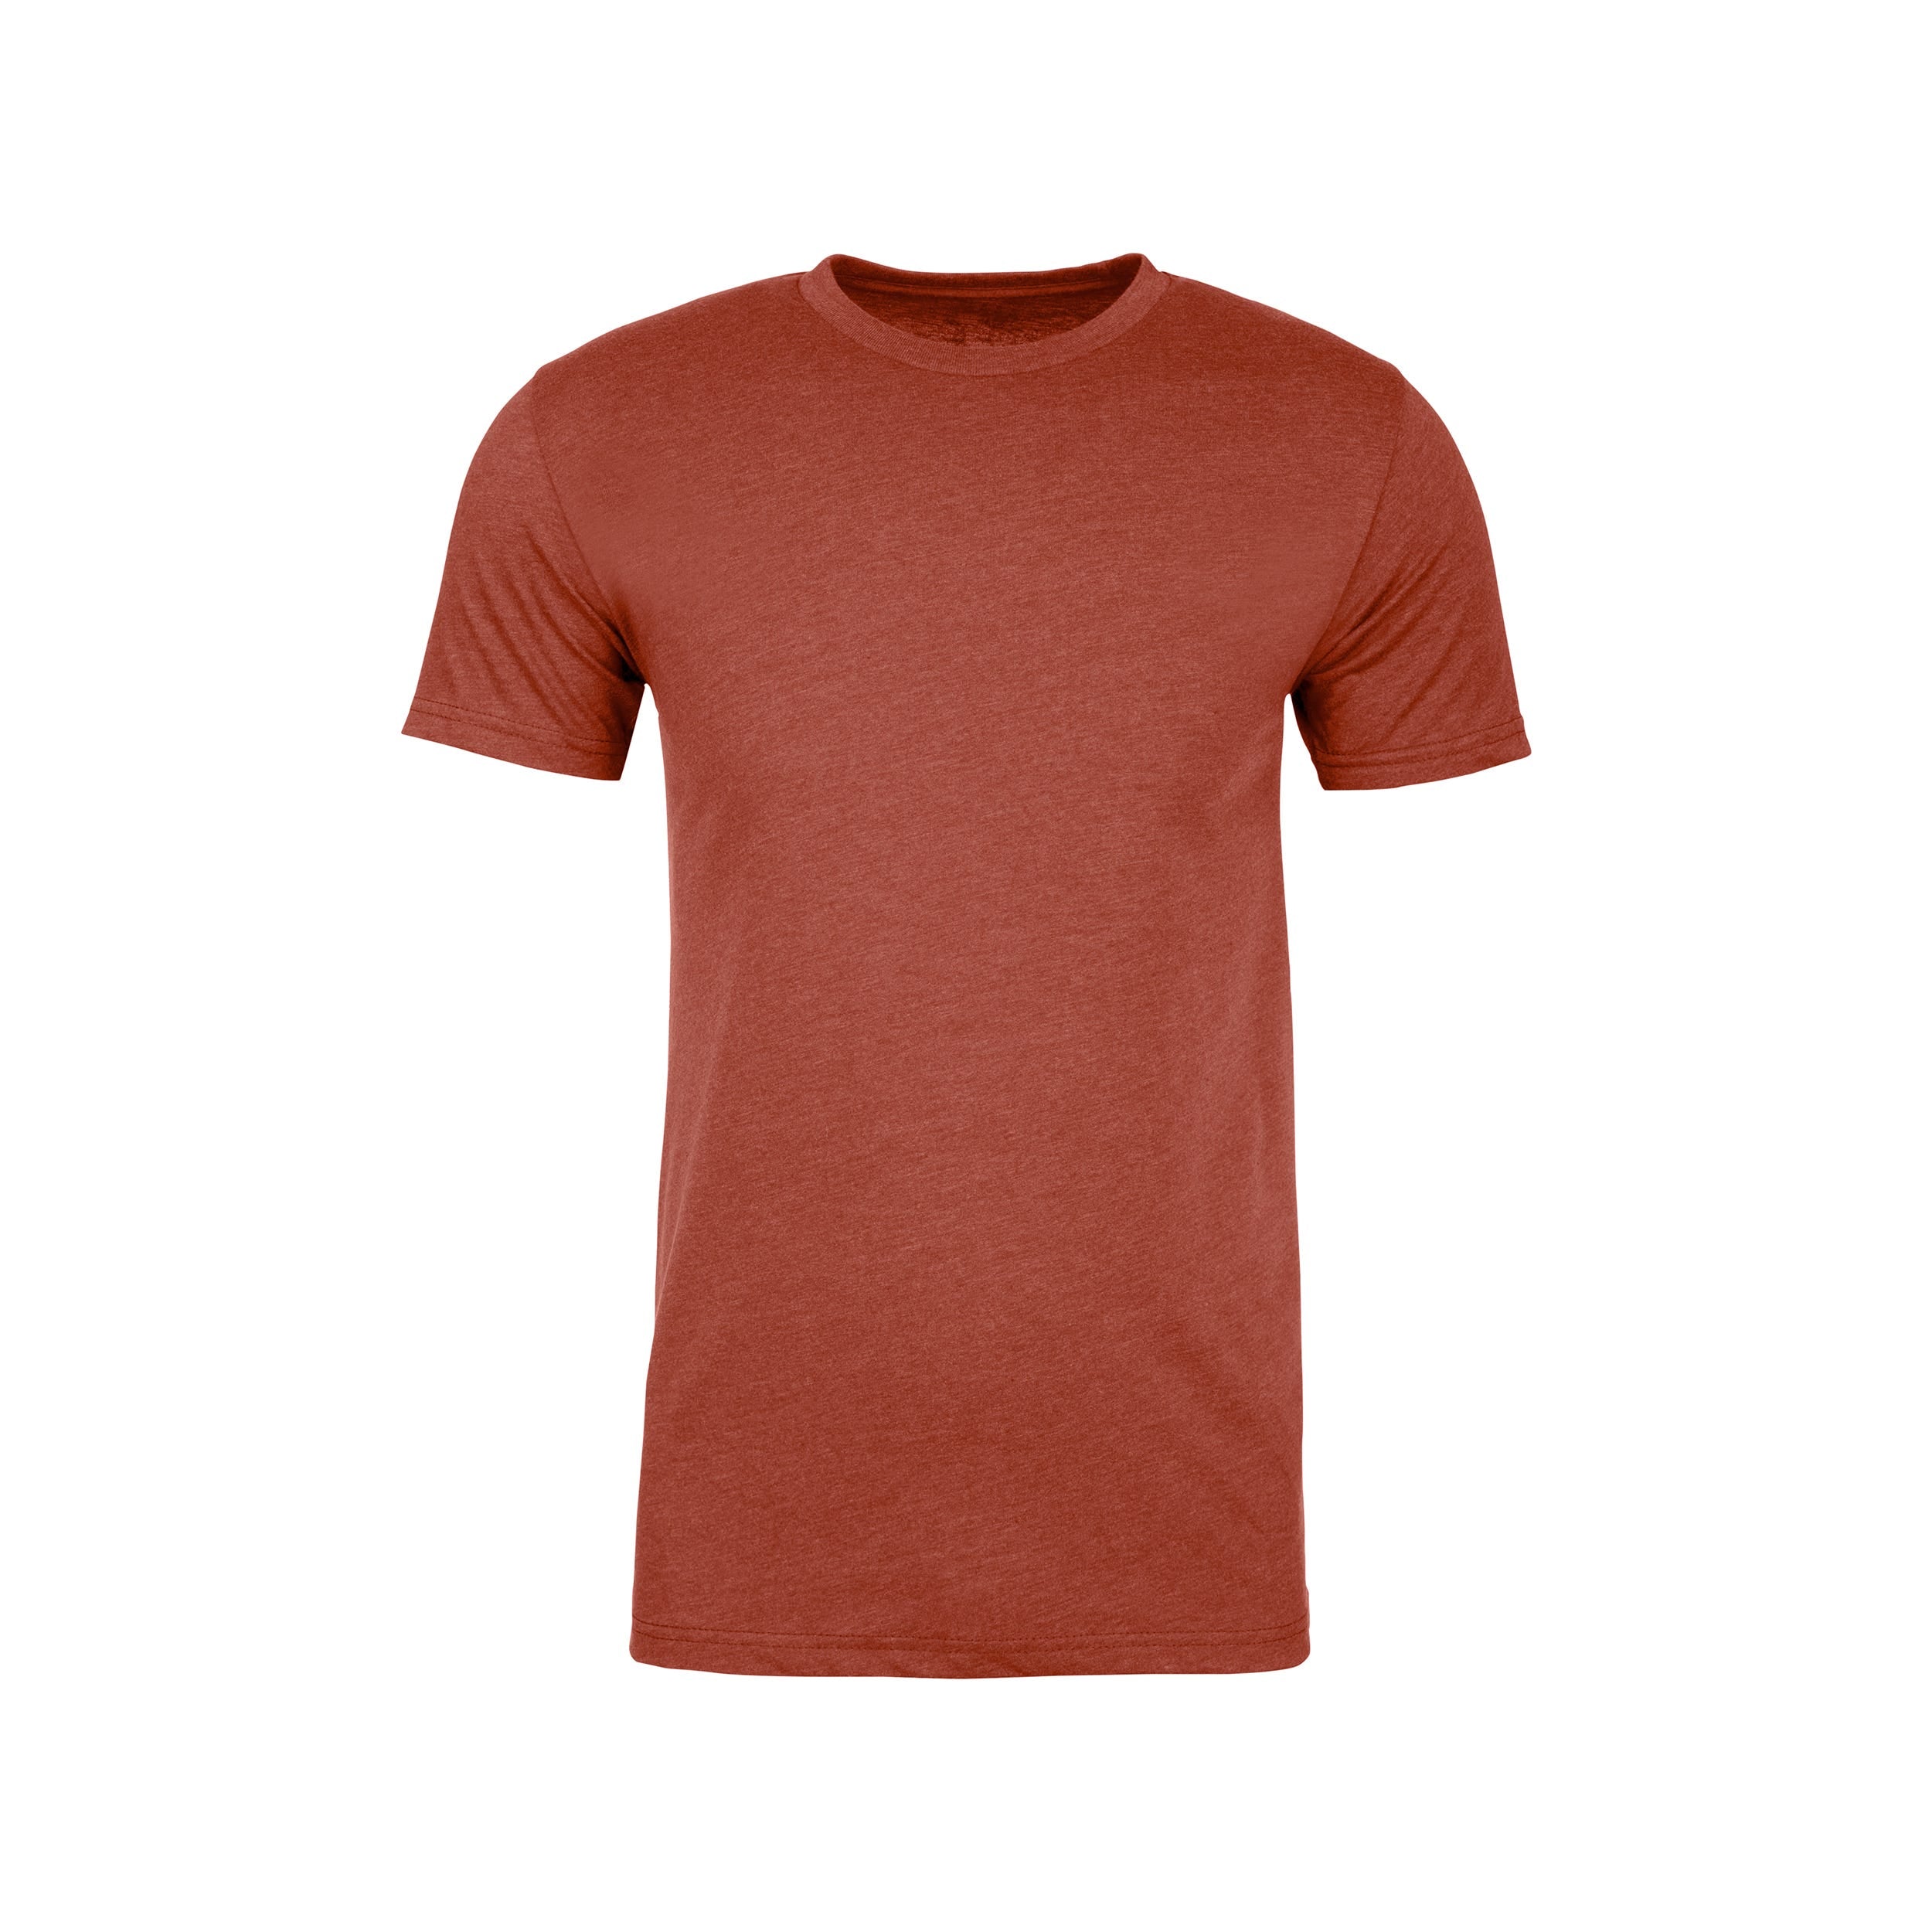 Unisex CVC T-Shirt